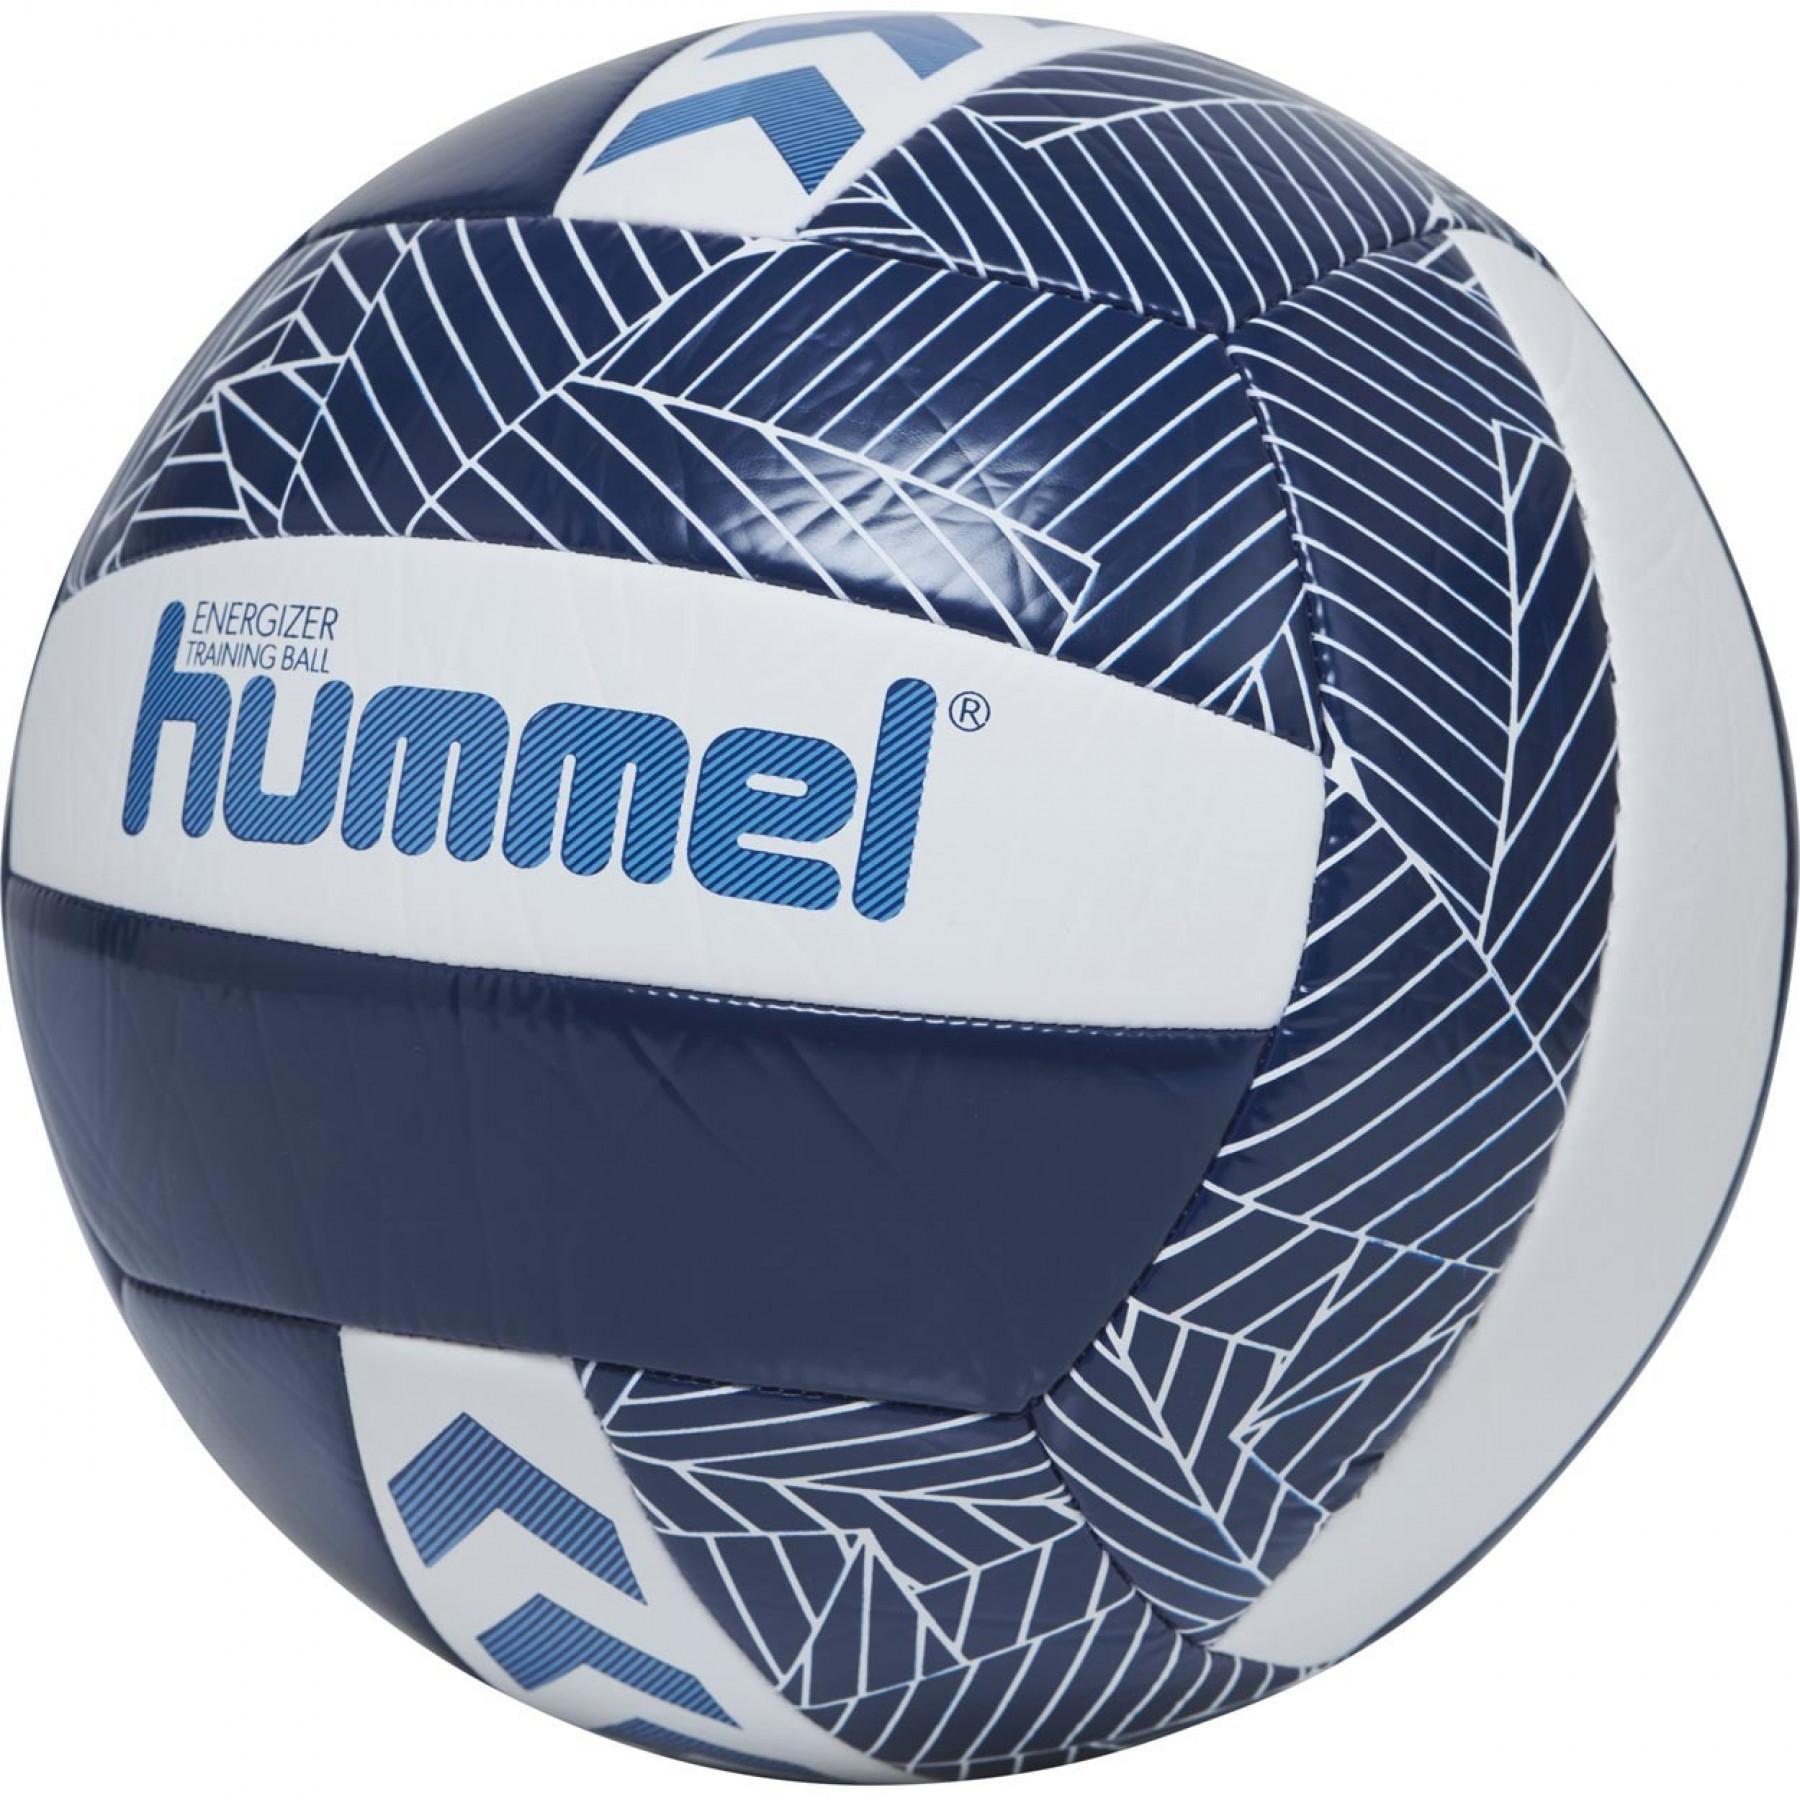 Conjunto de 5 bolas de voleibol Hummel Energizer [Taille5]